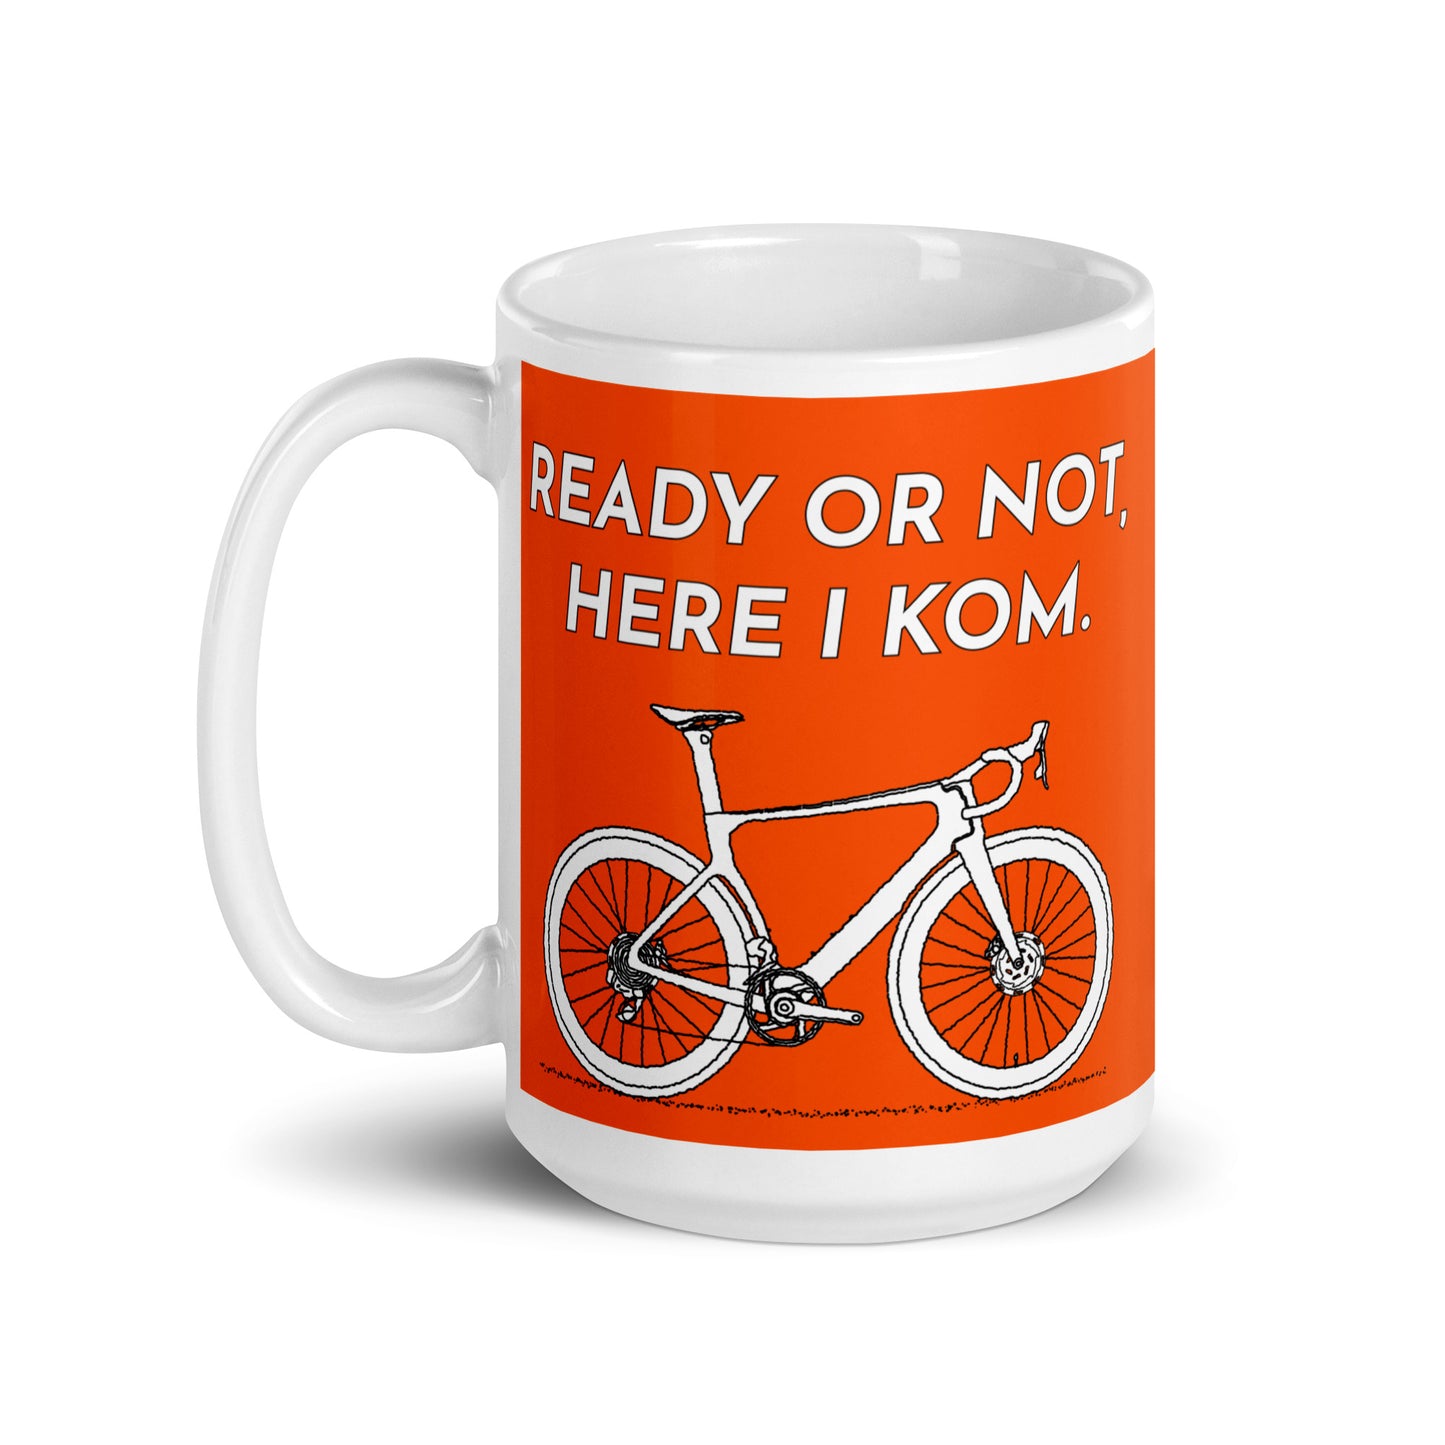 Ready Or Not, Here I KOM, Orange Bicycle Mug M076